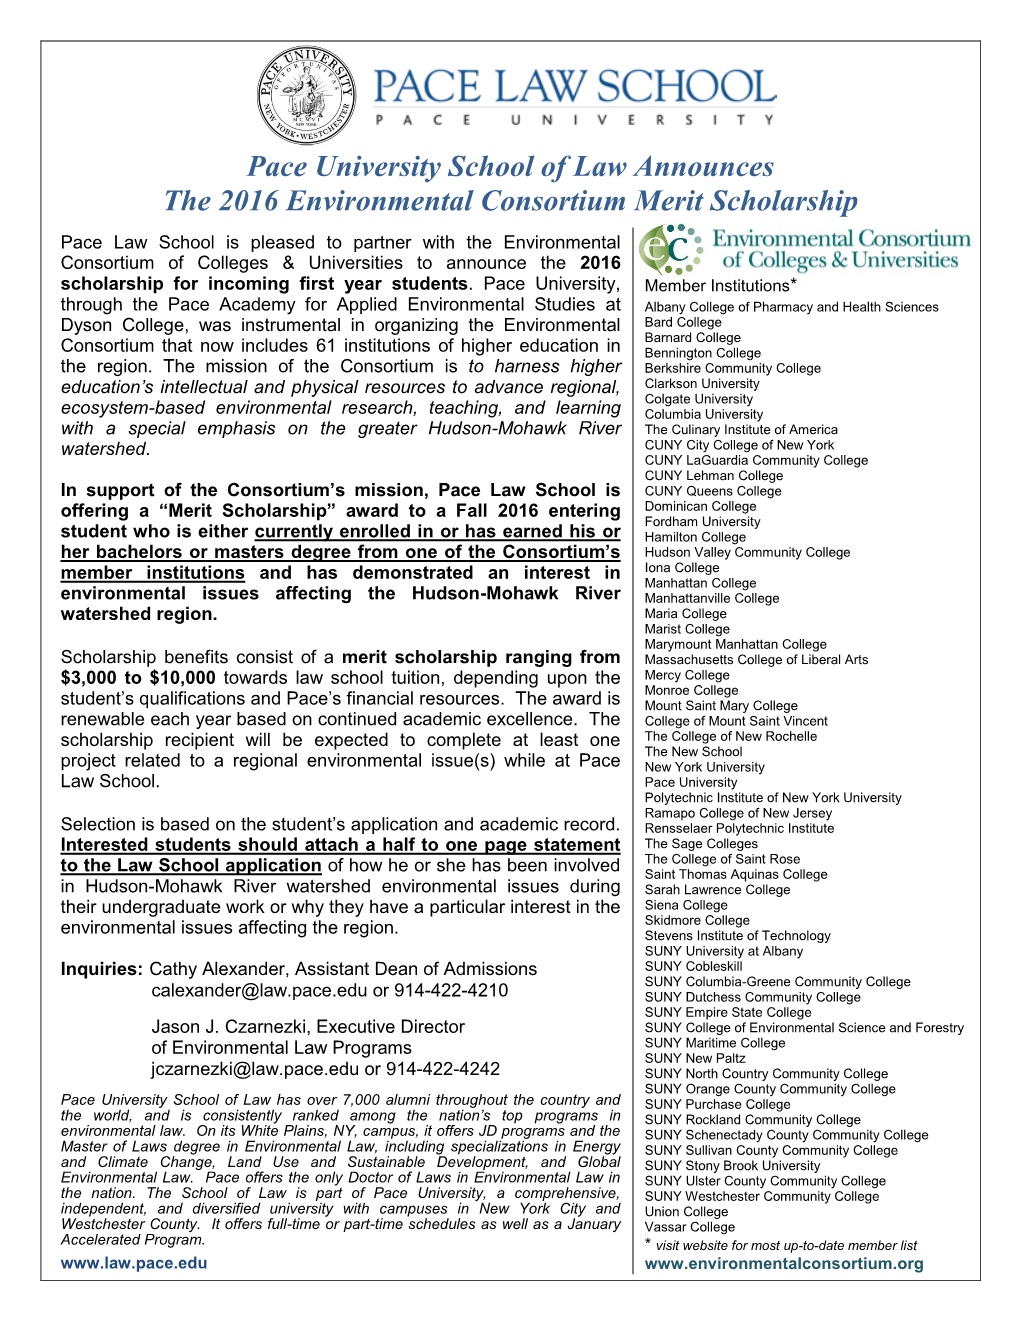 Pace University School of Law Announces the 2016 Environmental Consortium Merit Scholarship